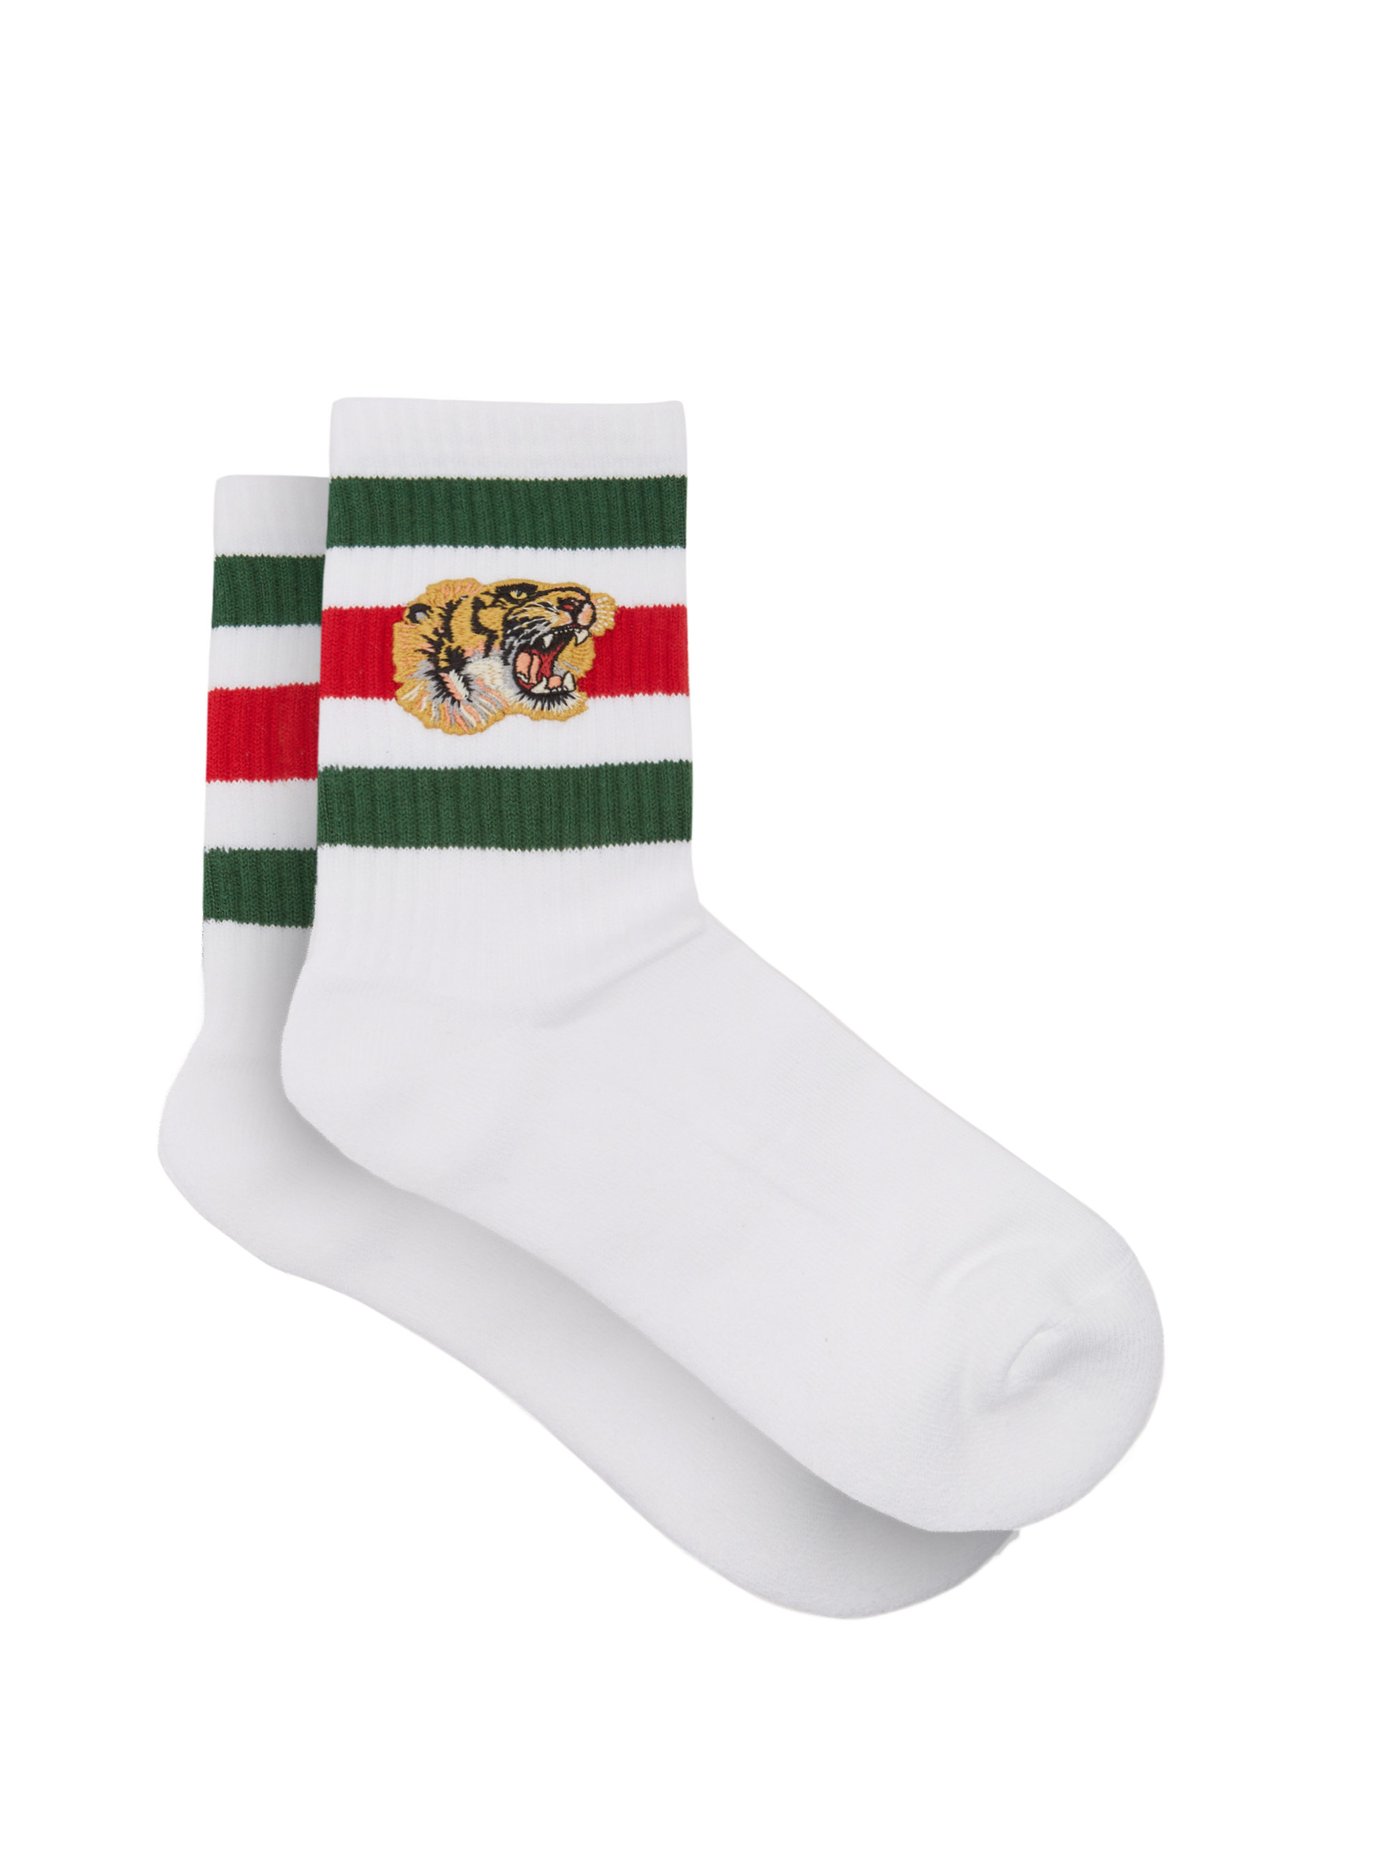 gucci socks buy